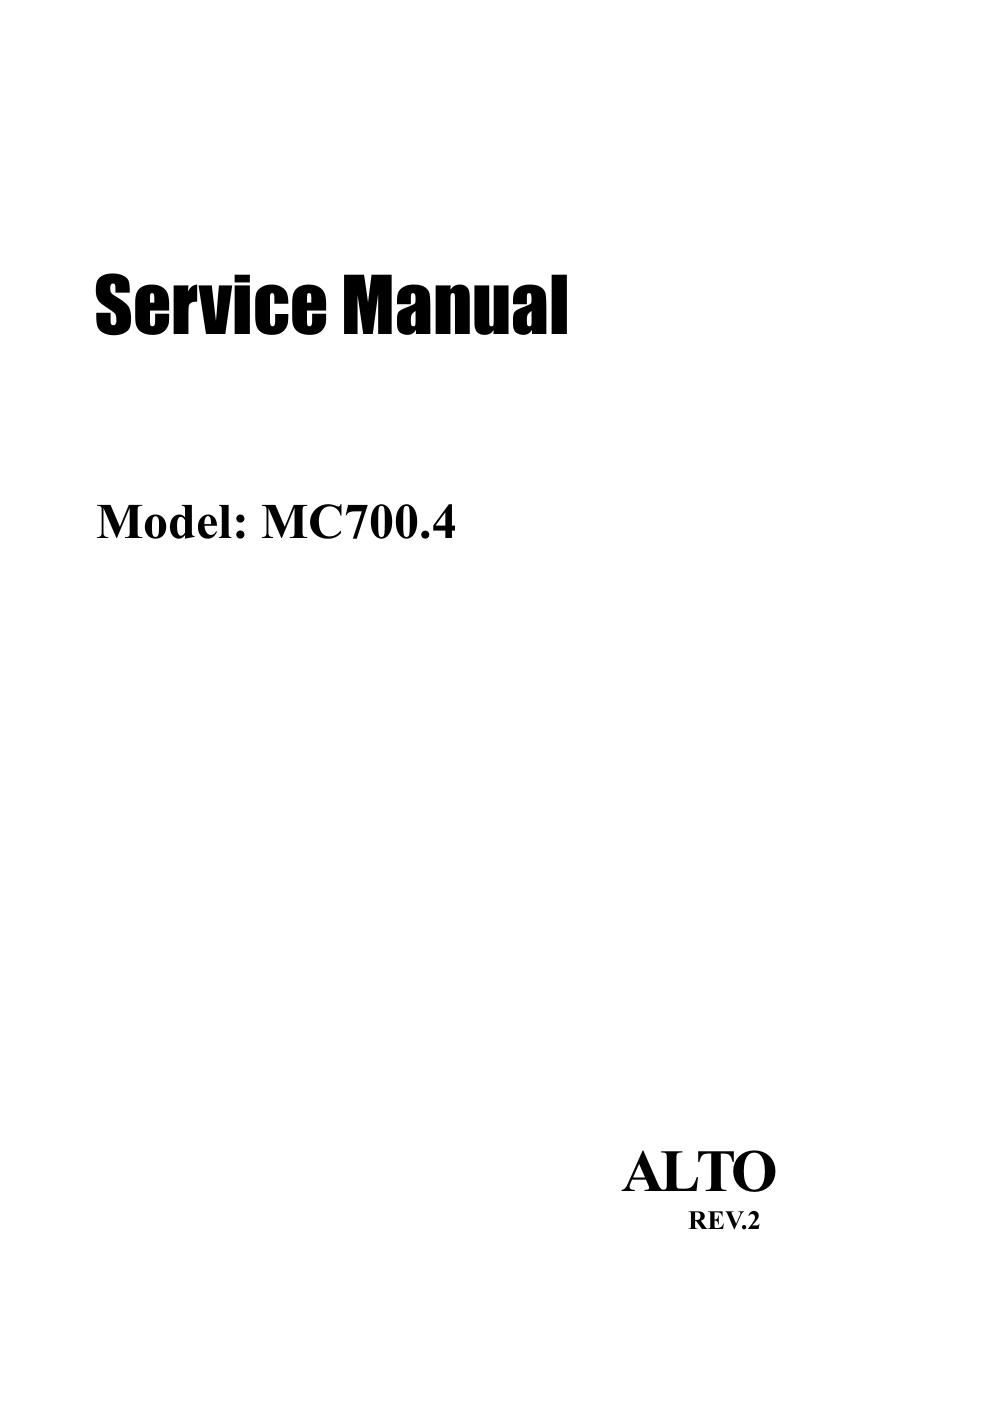 alto mc 700 4 service manual rev 2